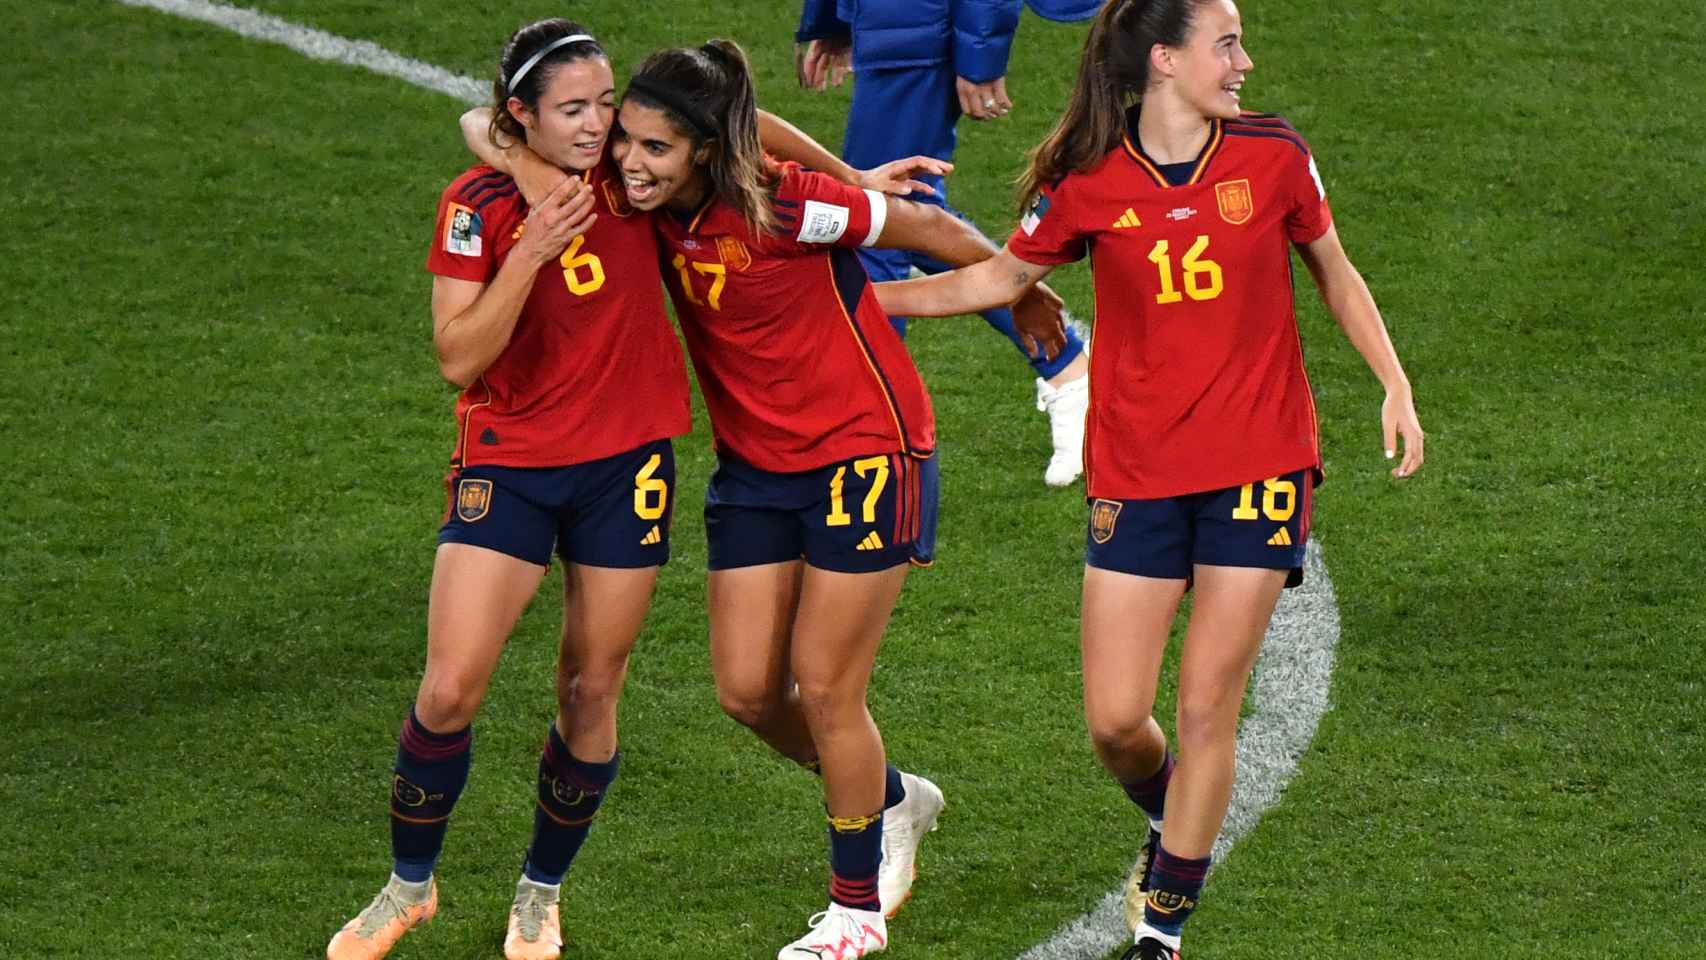 Aitana Bonmatí, Alba Redondo y María Pérez, jugadoras de la Selección femenina de fútbol